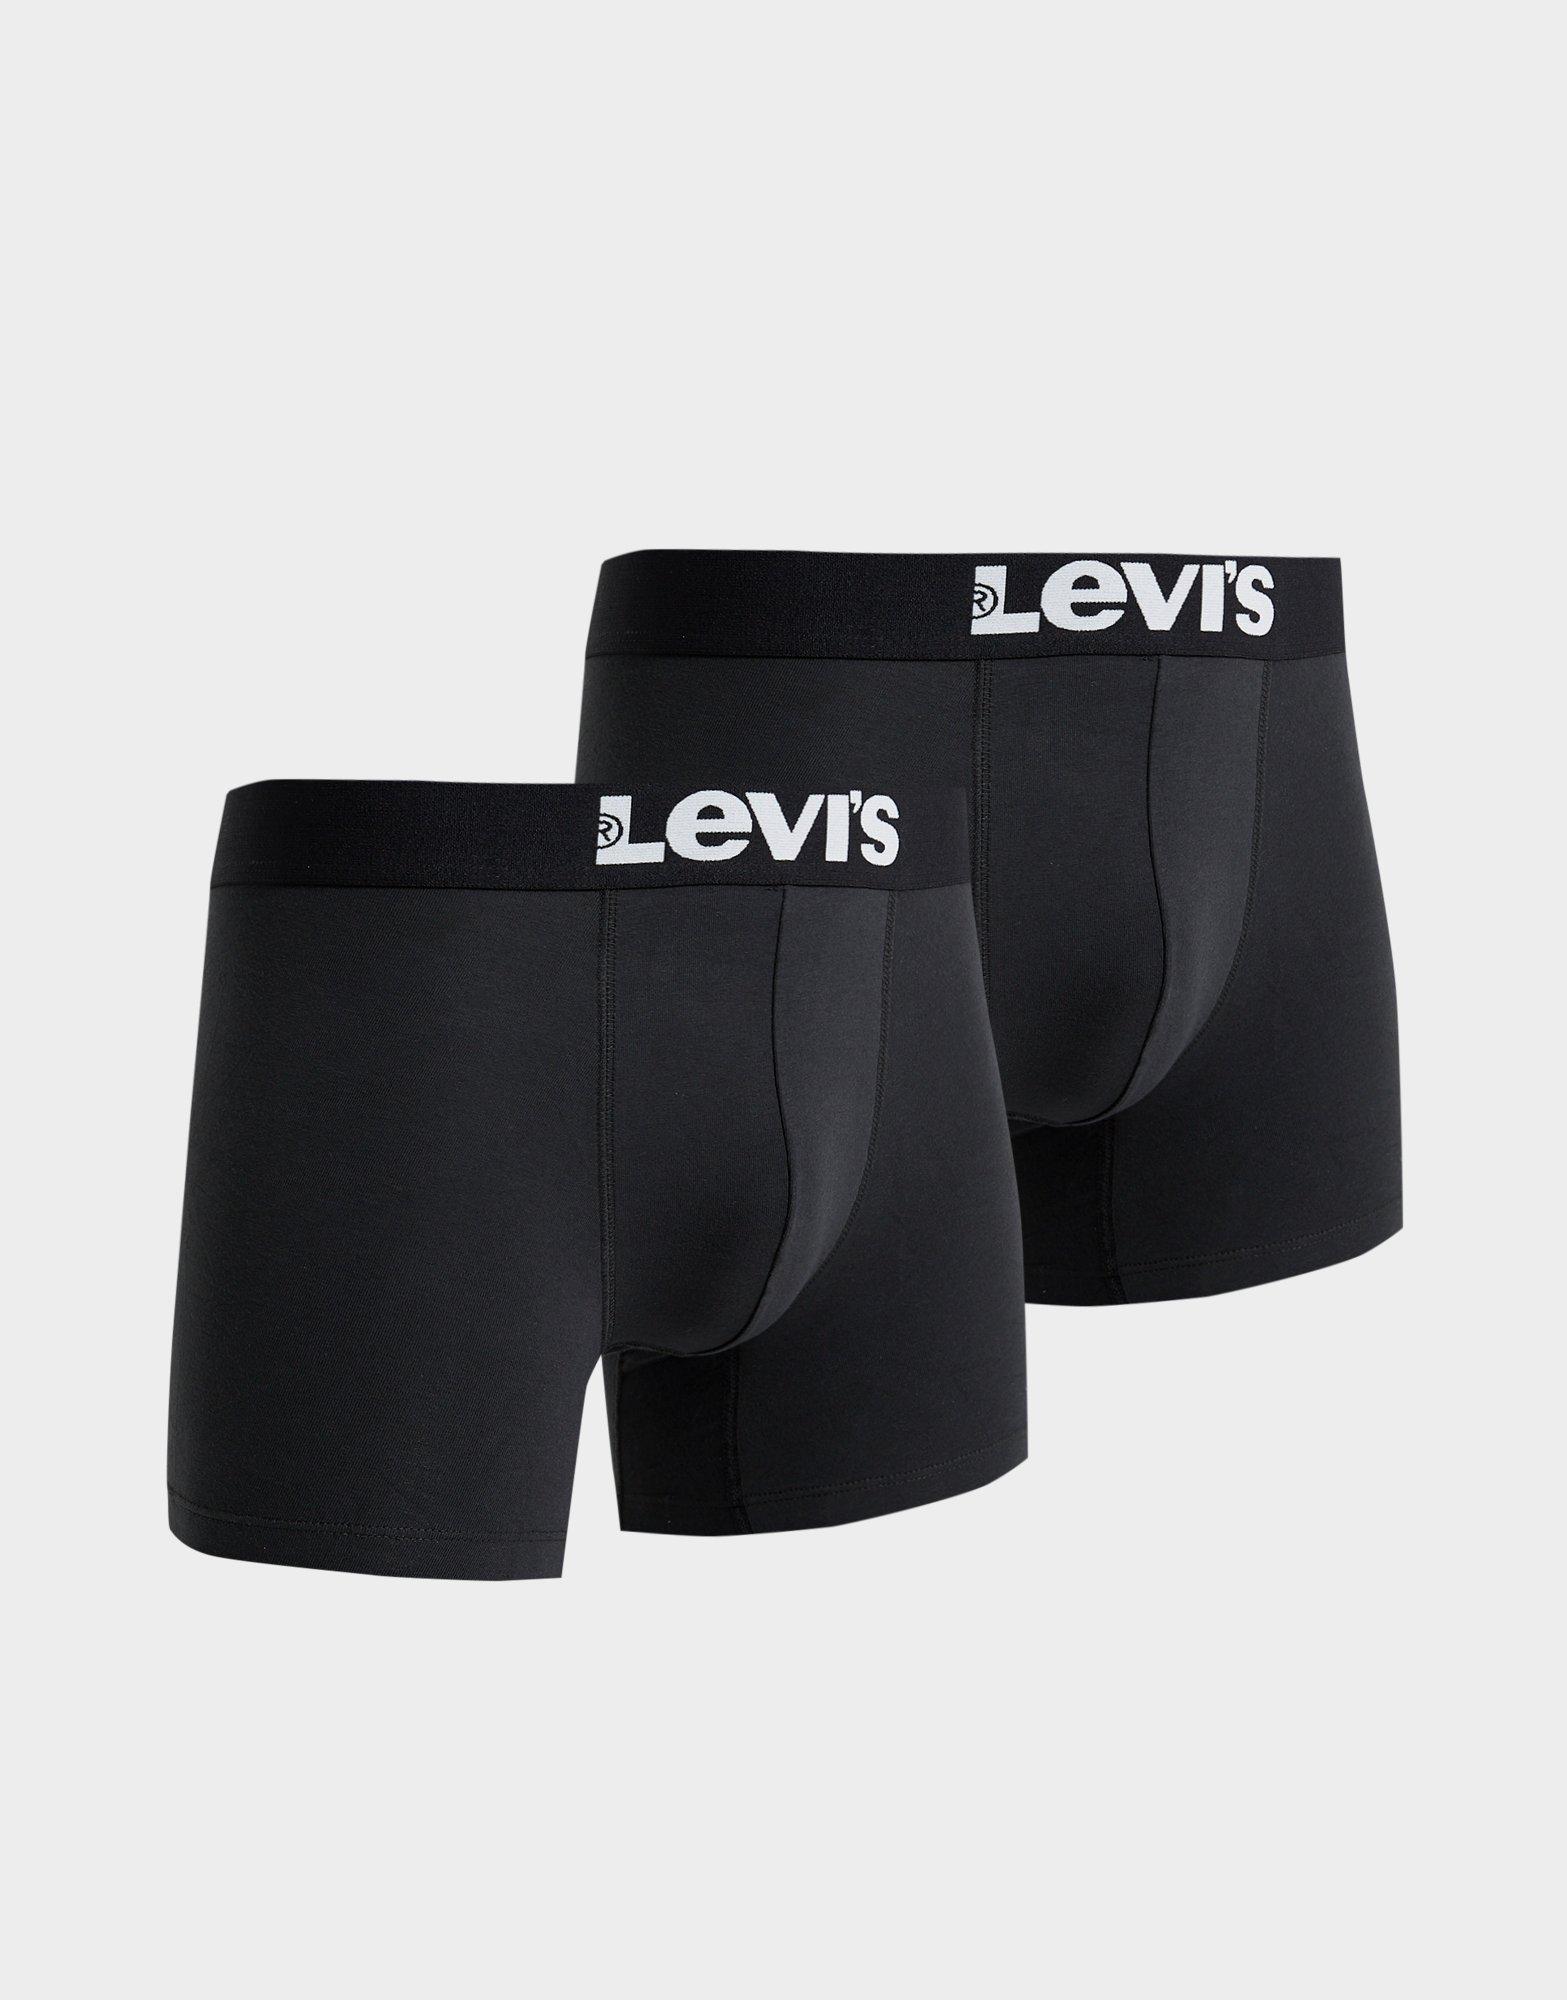 levis boxers size guide